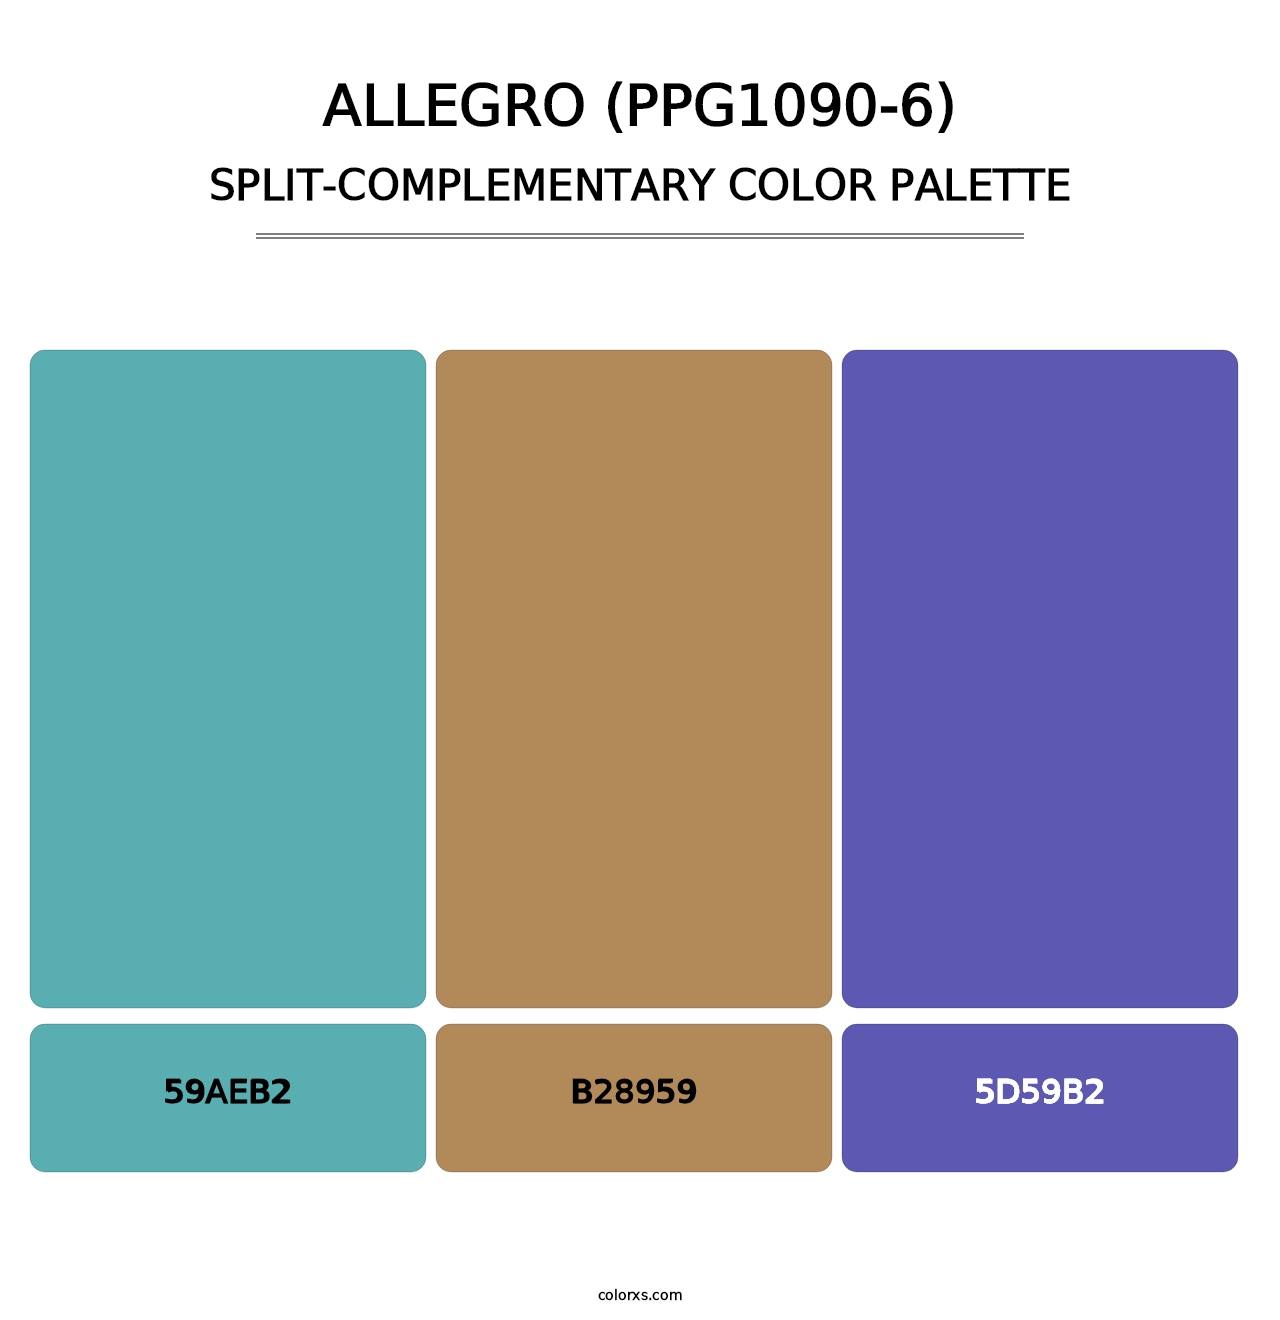 Allegro (PPG1090-6) - Split-Complementary Color Palette